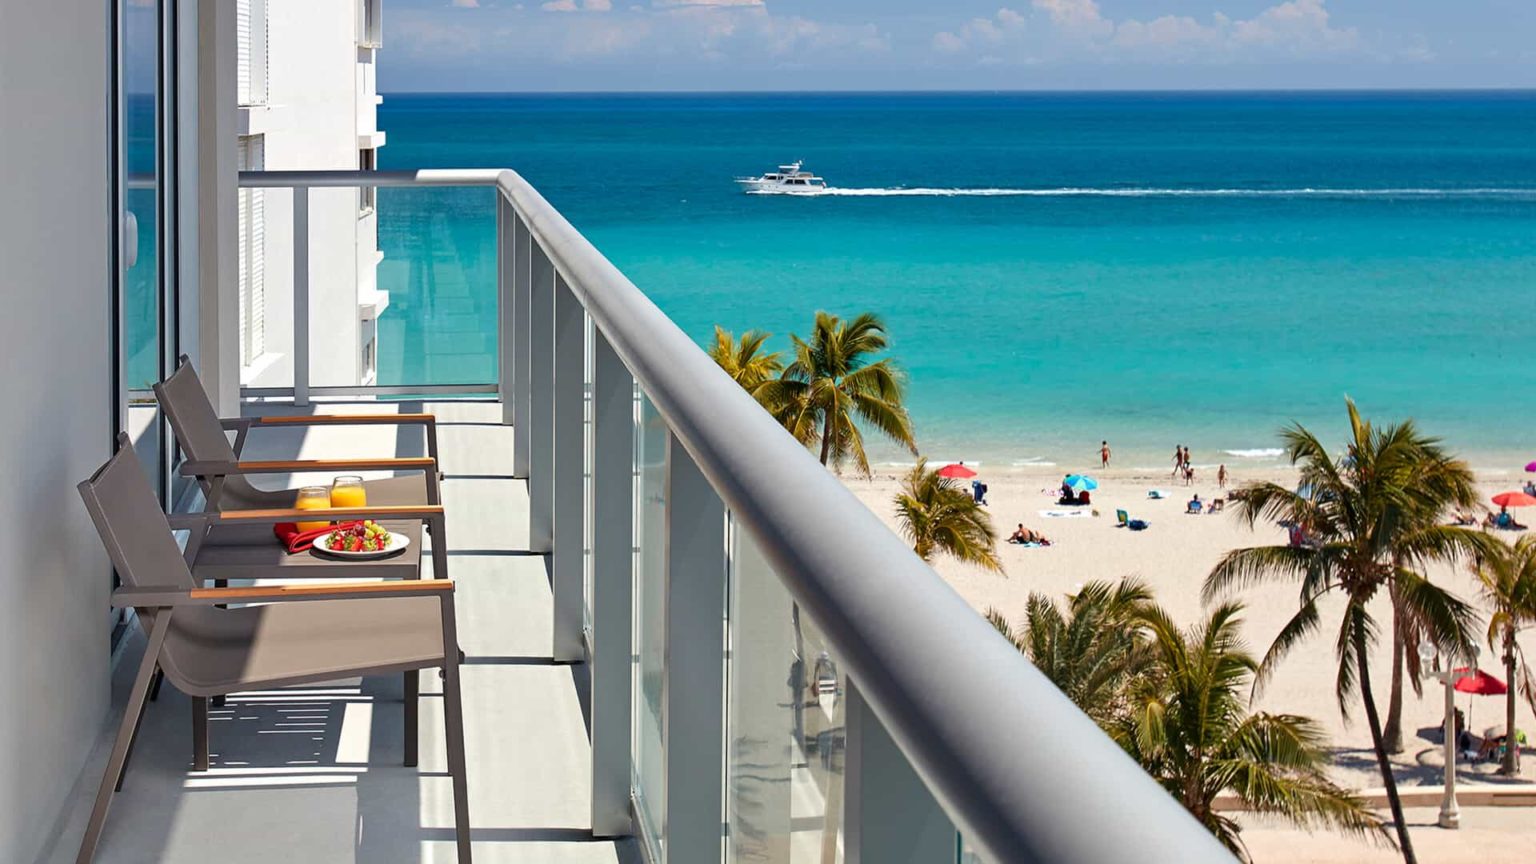 Costa Hollywood Beach Resort suite balcony overlooking the beach